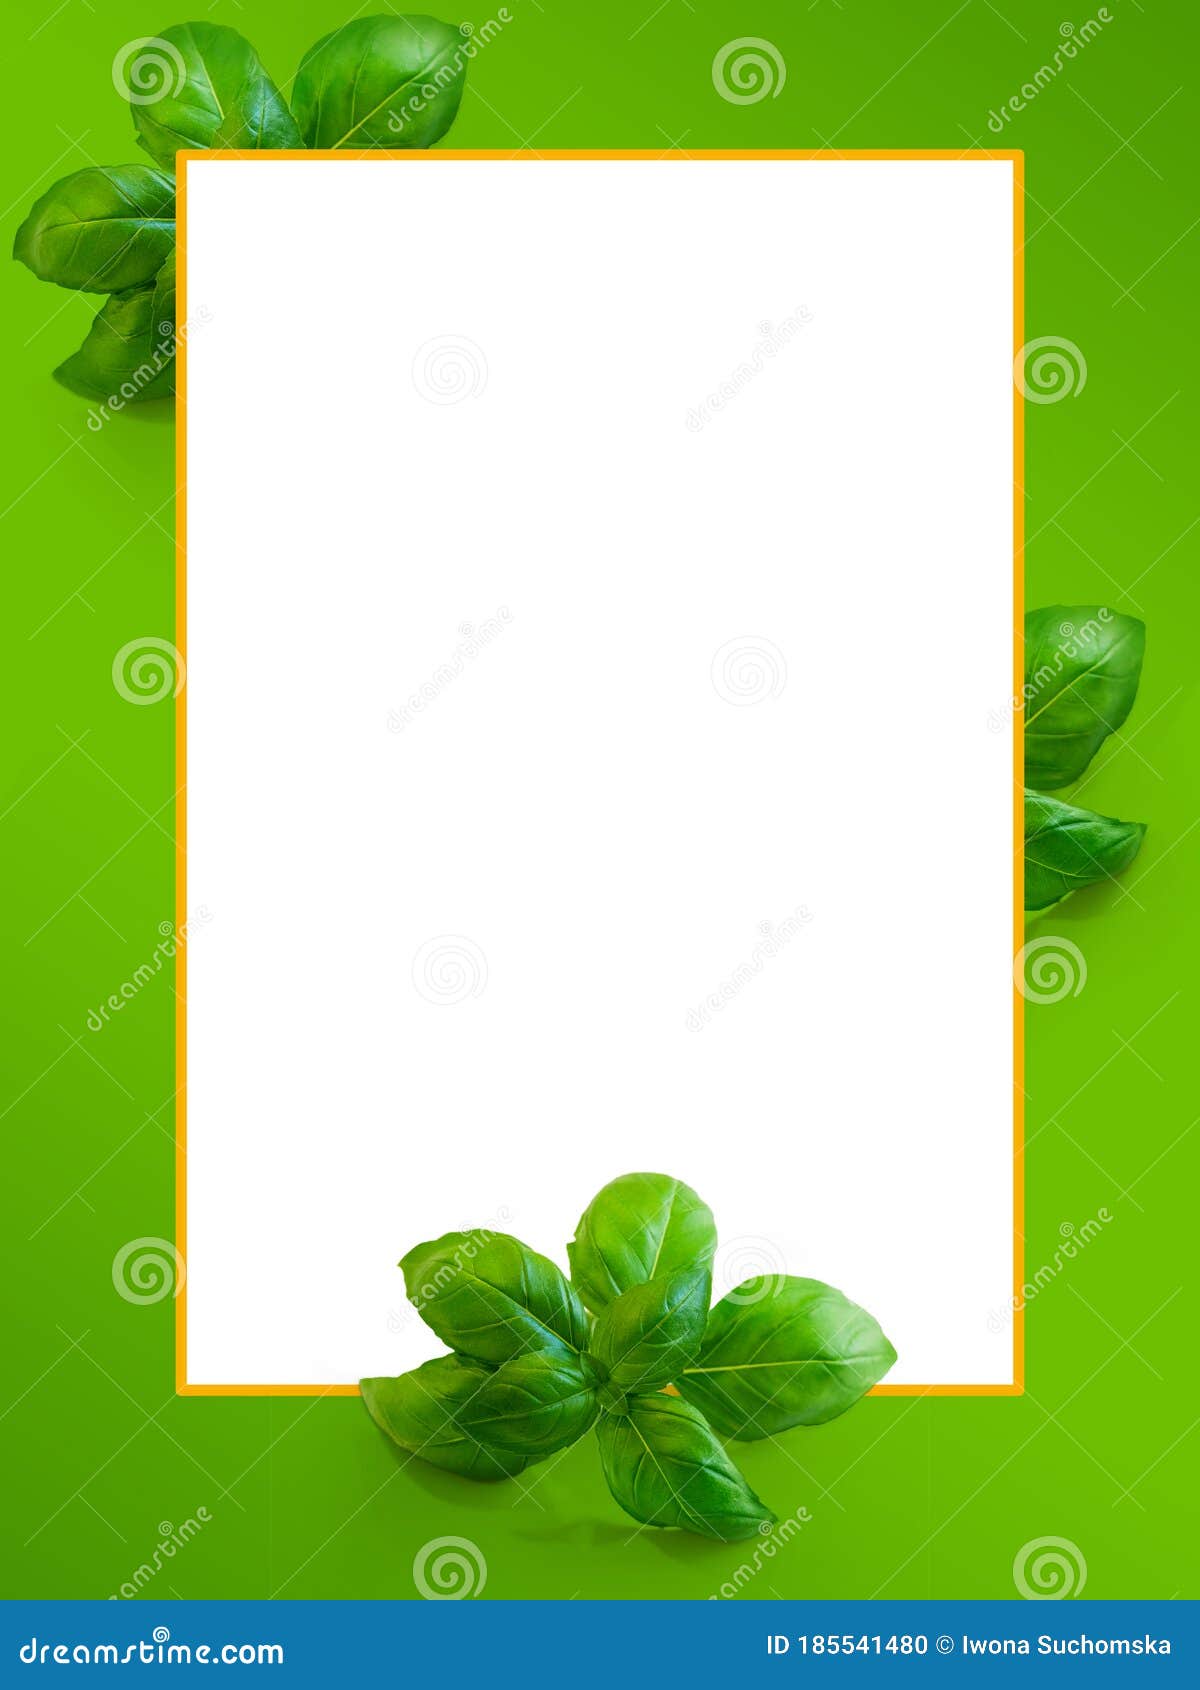 Fresh Green Basil Background Frame Menu. Stock Photo - Image of plant,  card: 185541480